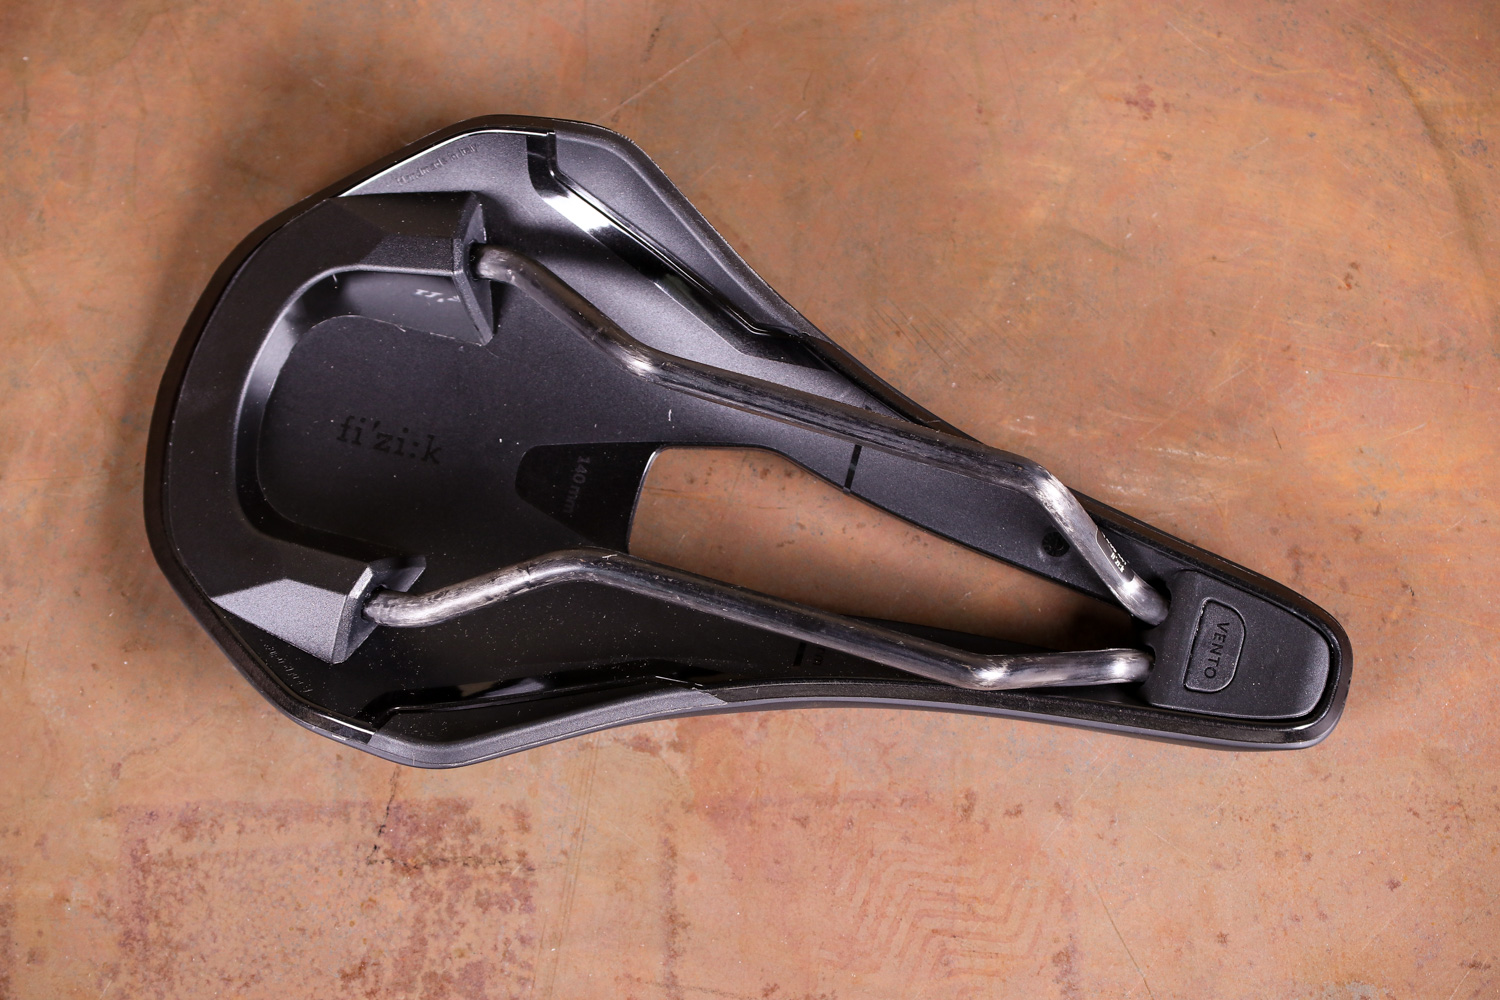 Review: Fizik Vento Argo R1 saddle | road.cc